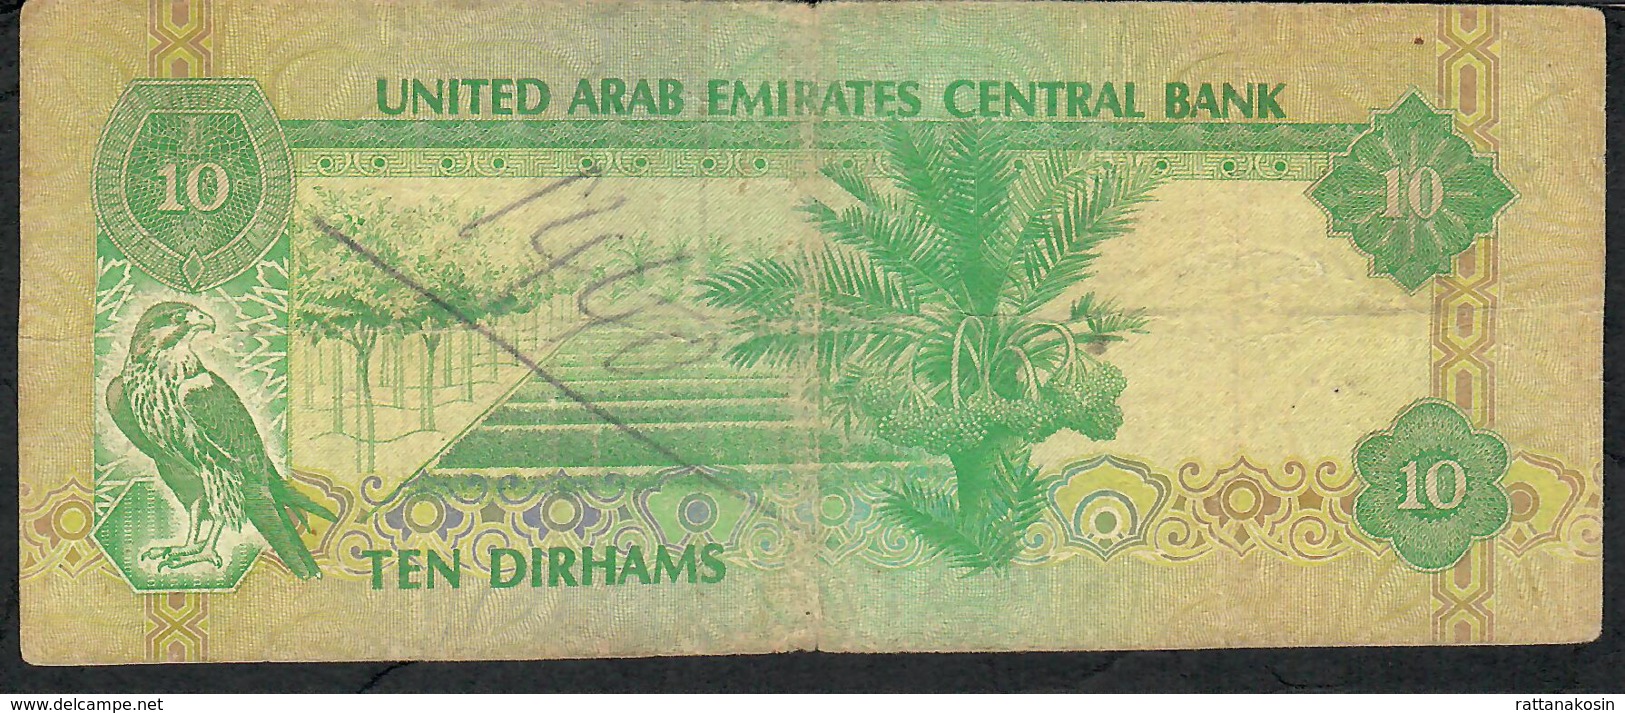 U.A.E. P8 10 DIRHAMS 1982 FINE - Verenigde Arabische Emiraten